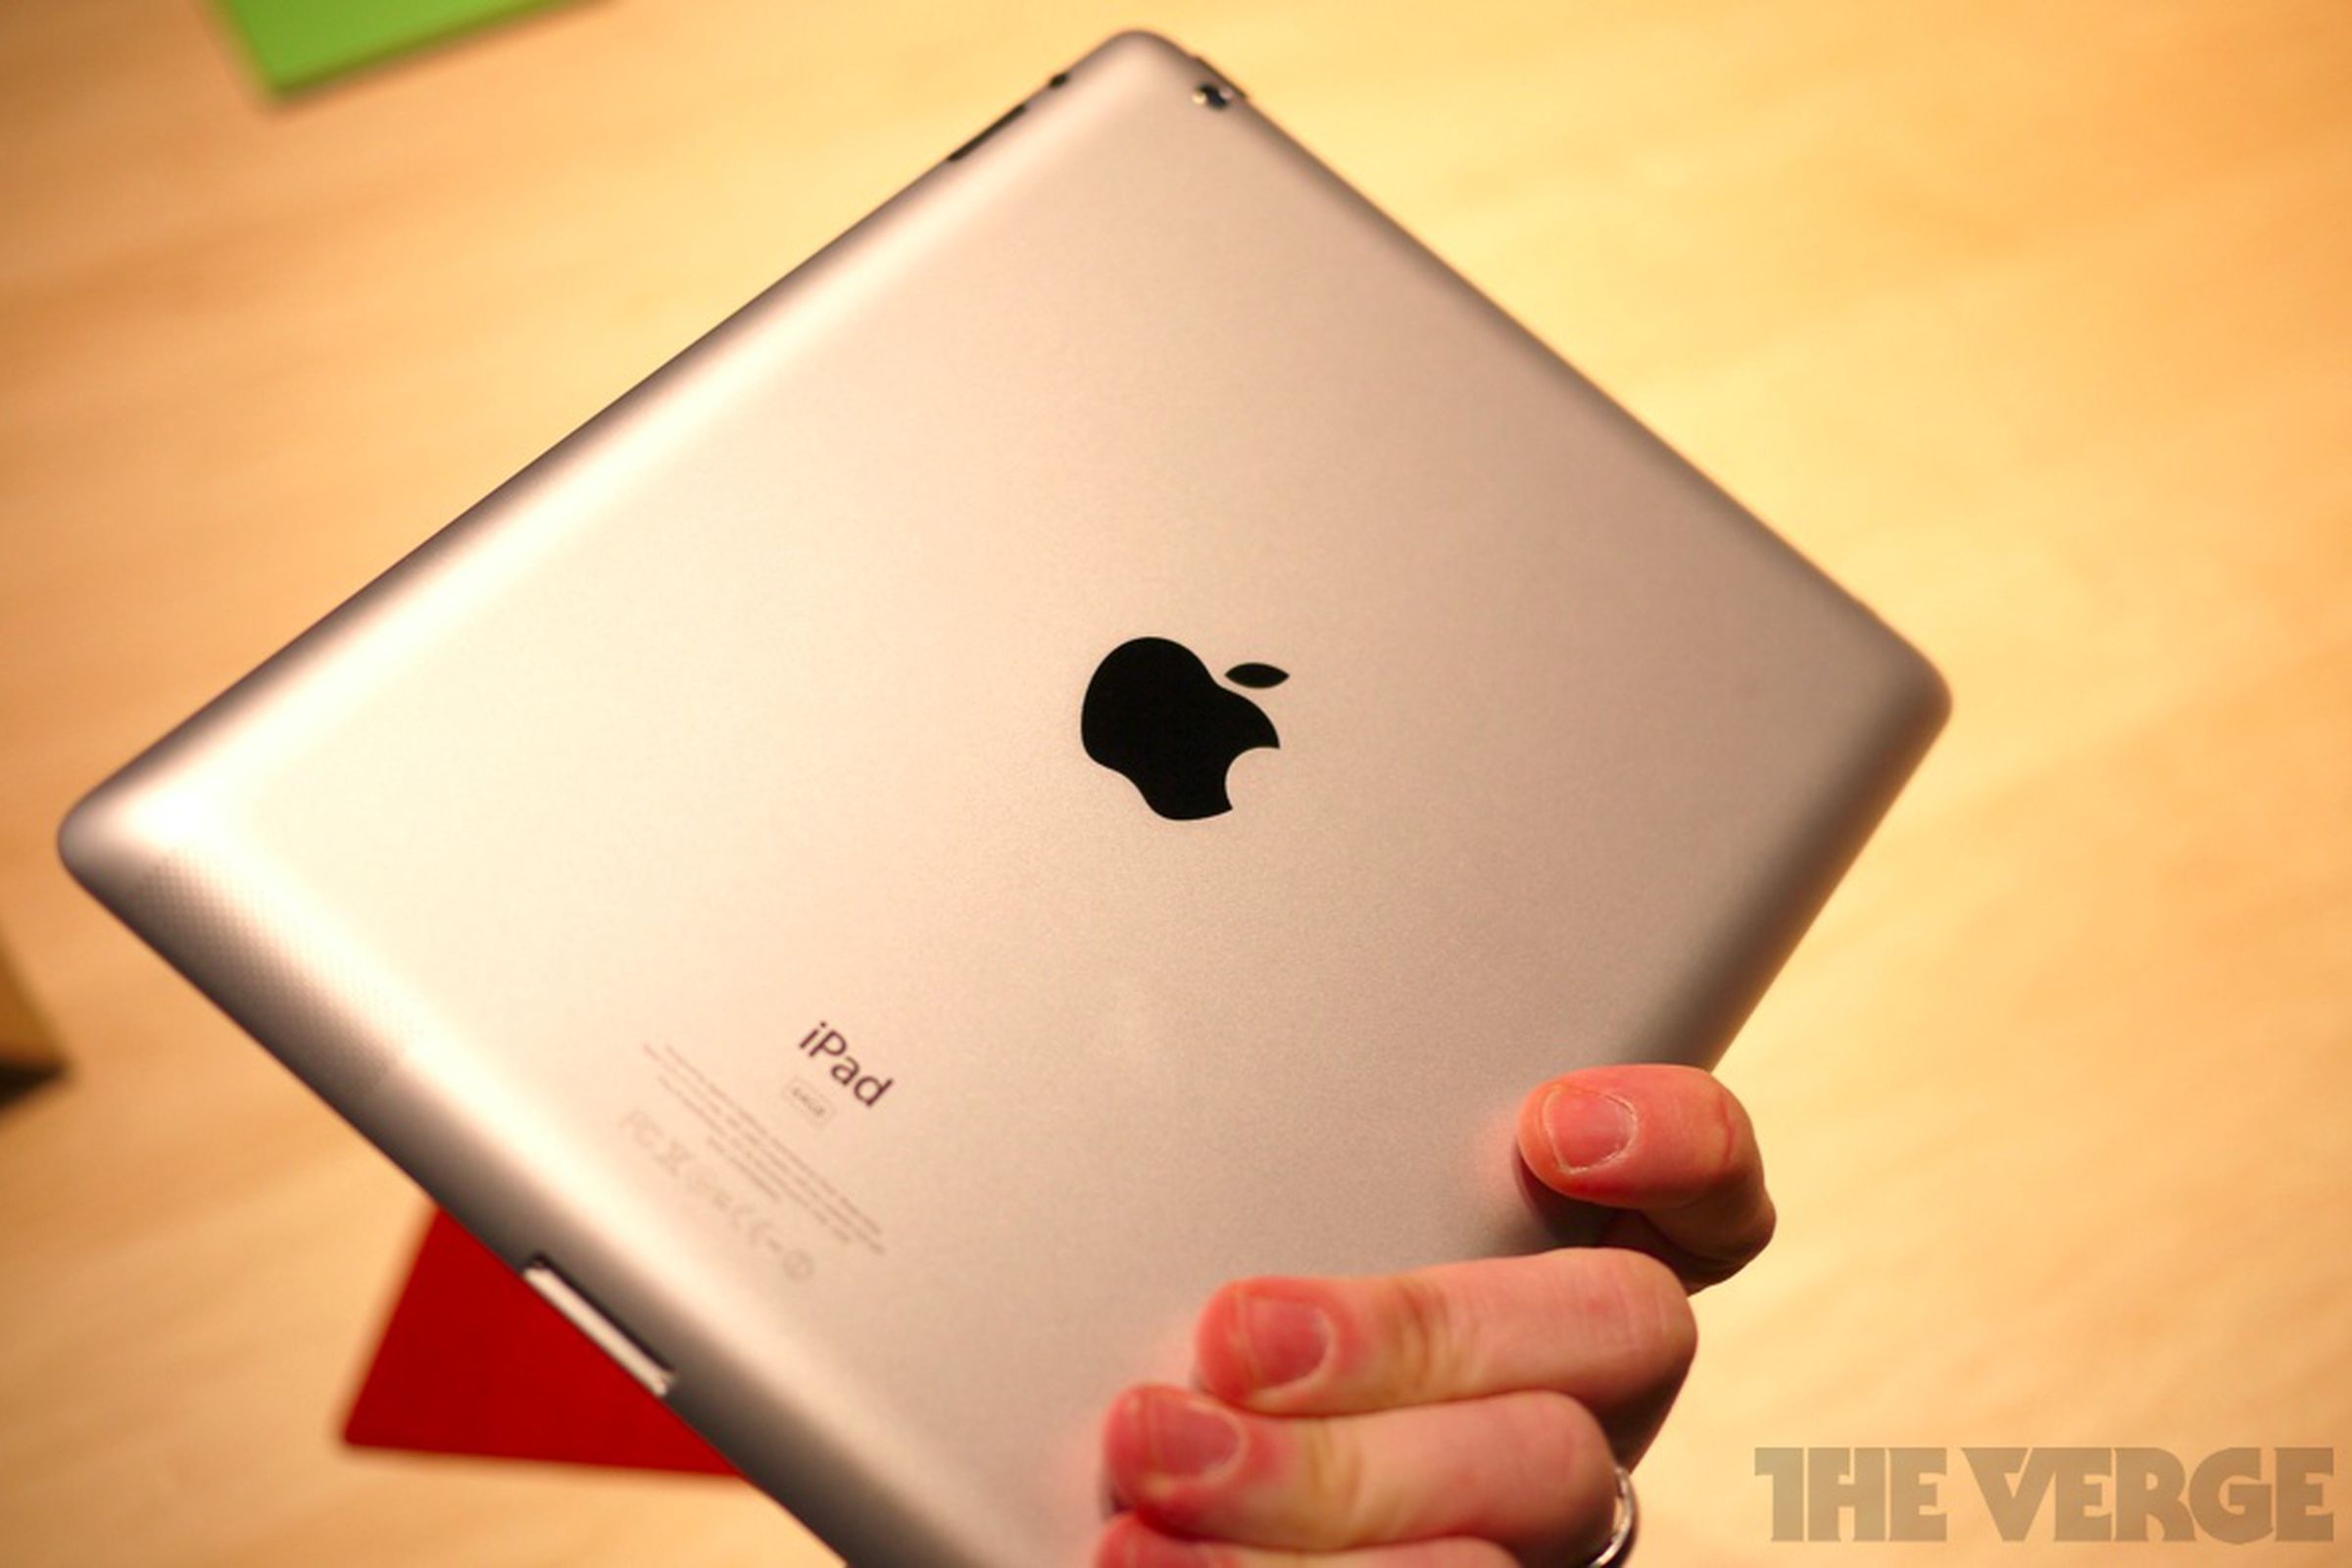 Gallery Photo: New iPad hands-on photos